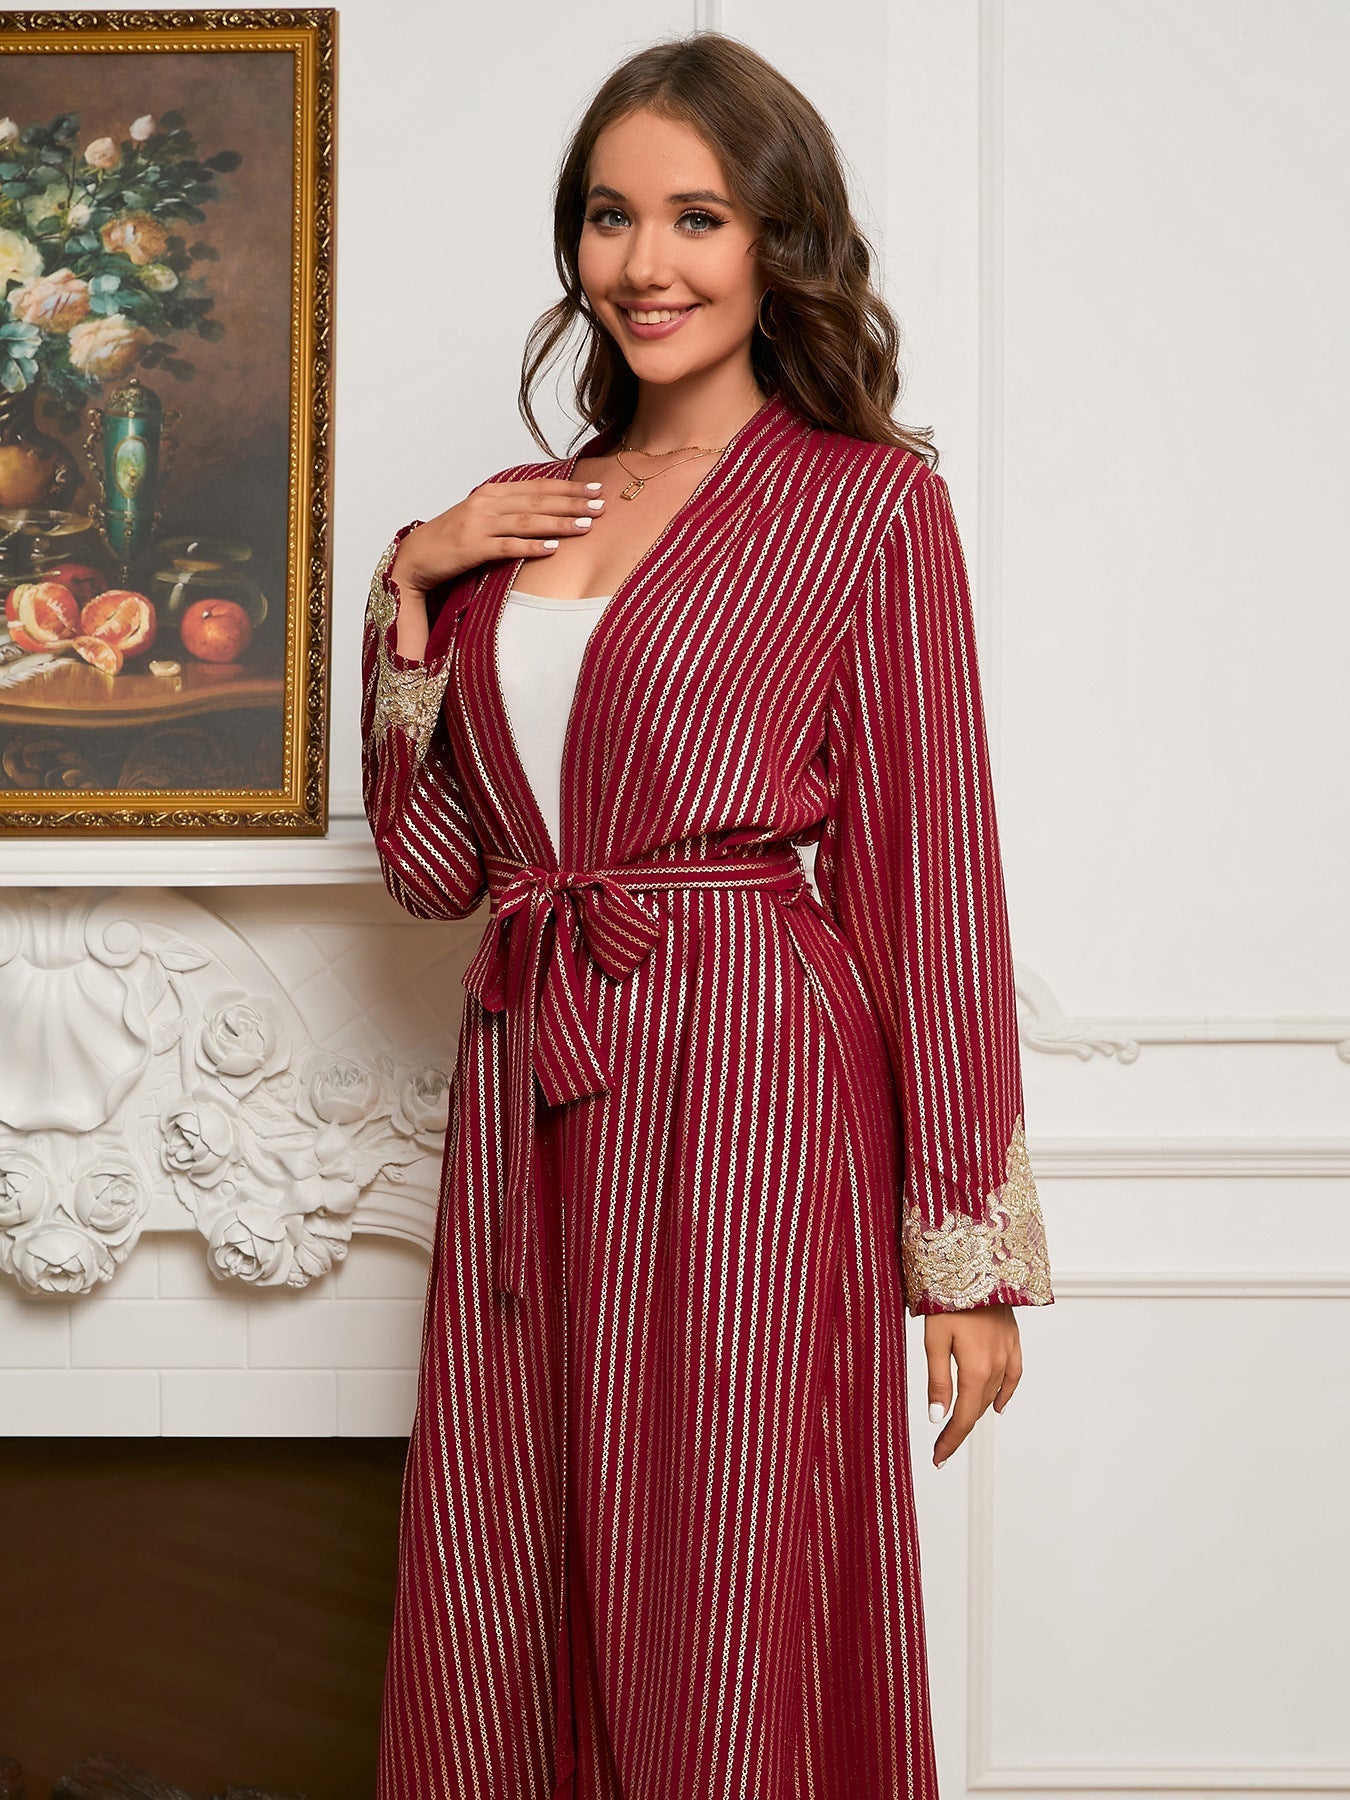 Women Cardigan Long Sleeve Spring Autumn Elegant Clothing